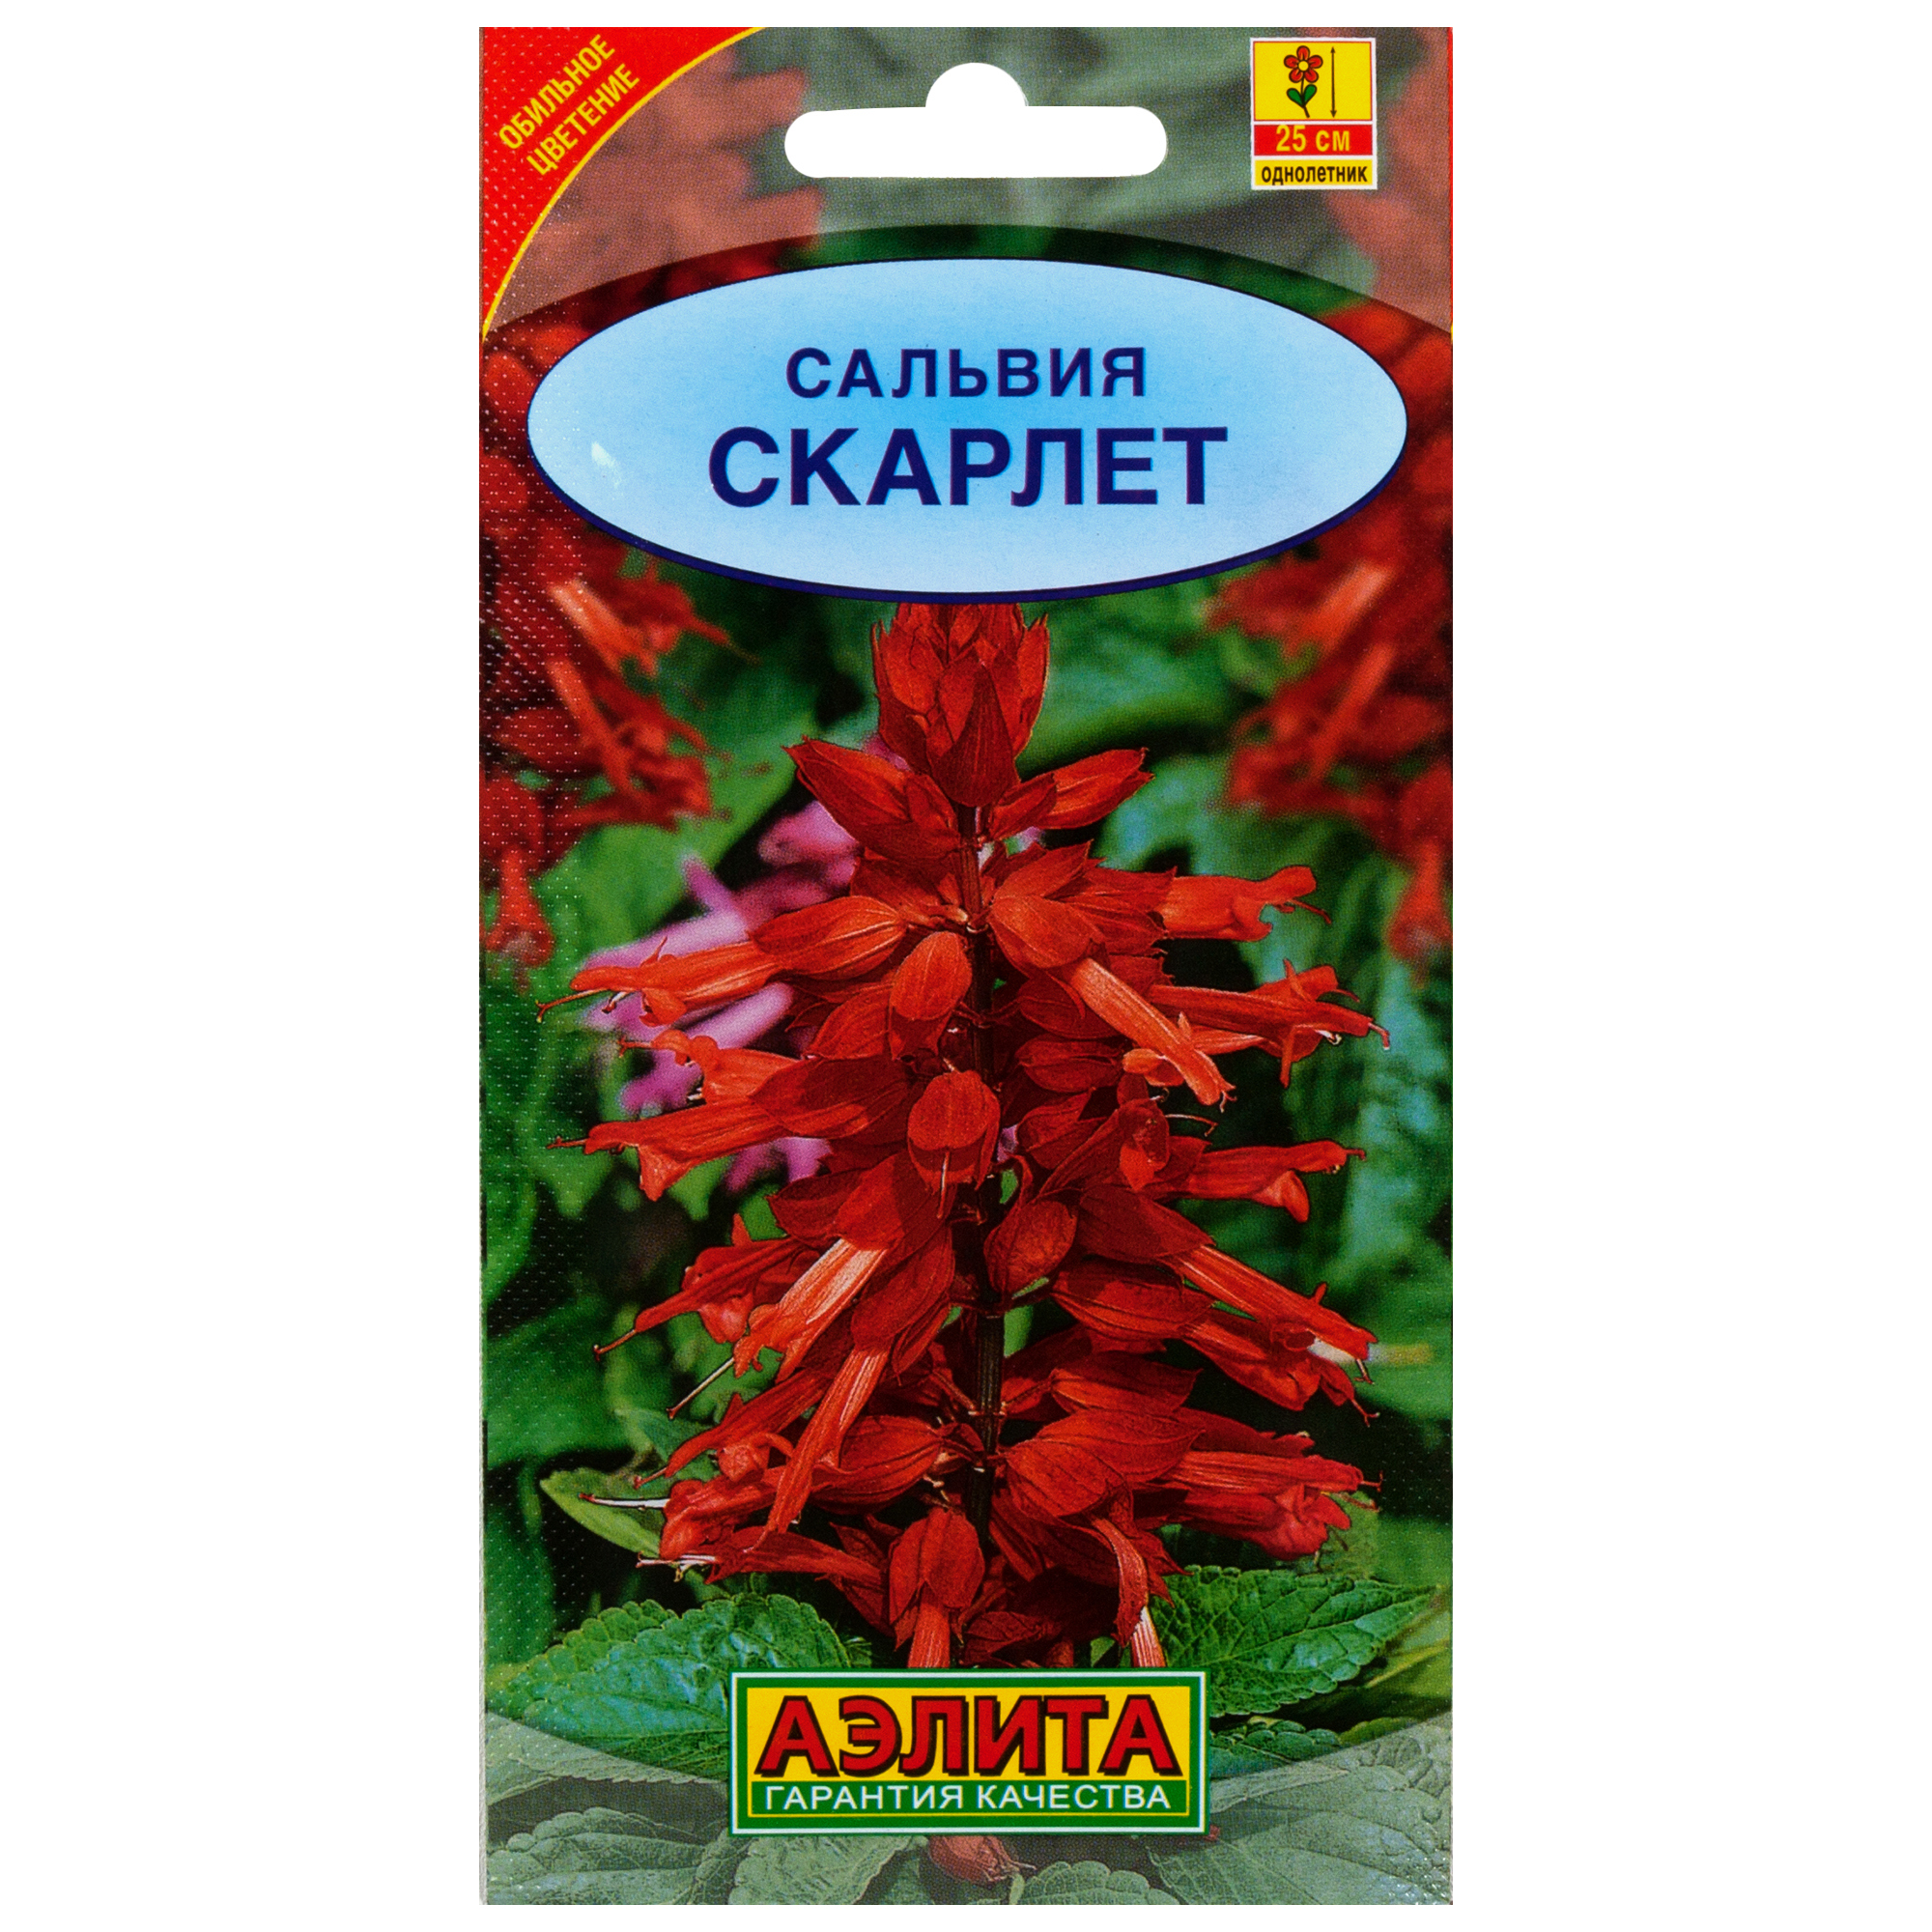 Семена цветов  Скарлет красная Аэлита ️  по цене 27 ₽/шт .